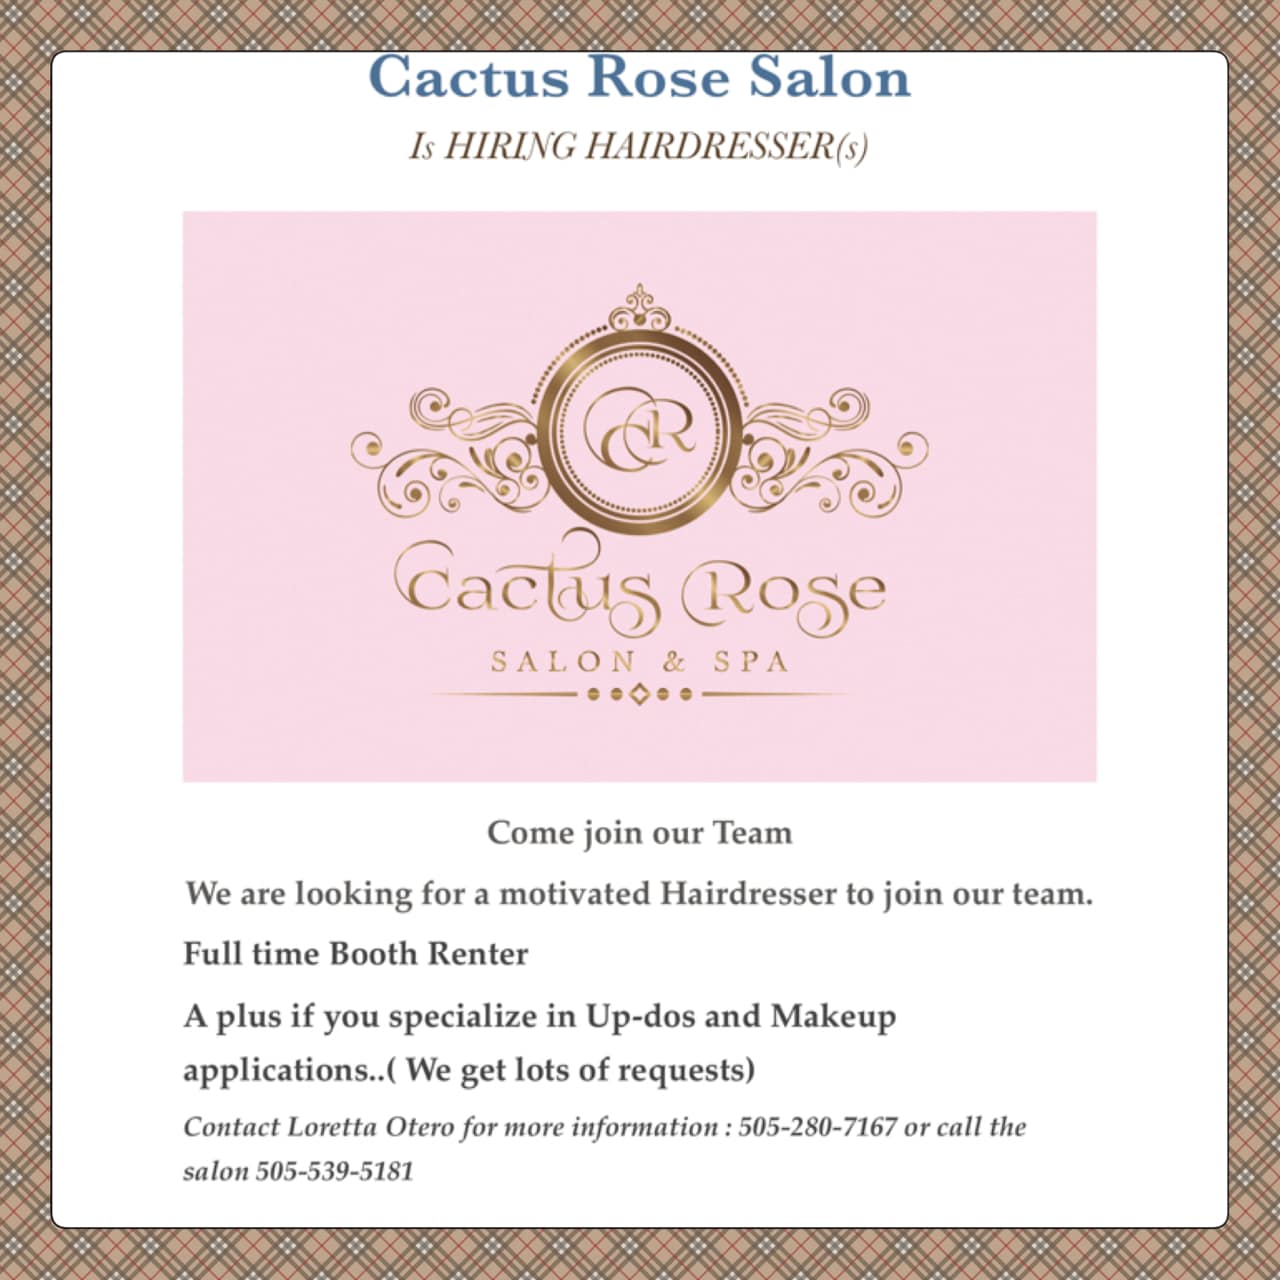 Cactus Rose Salon & Spa